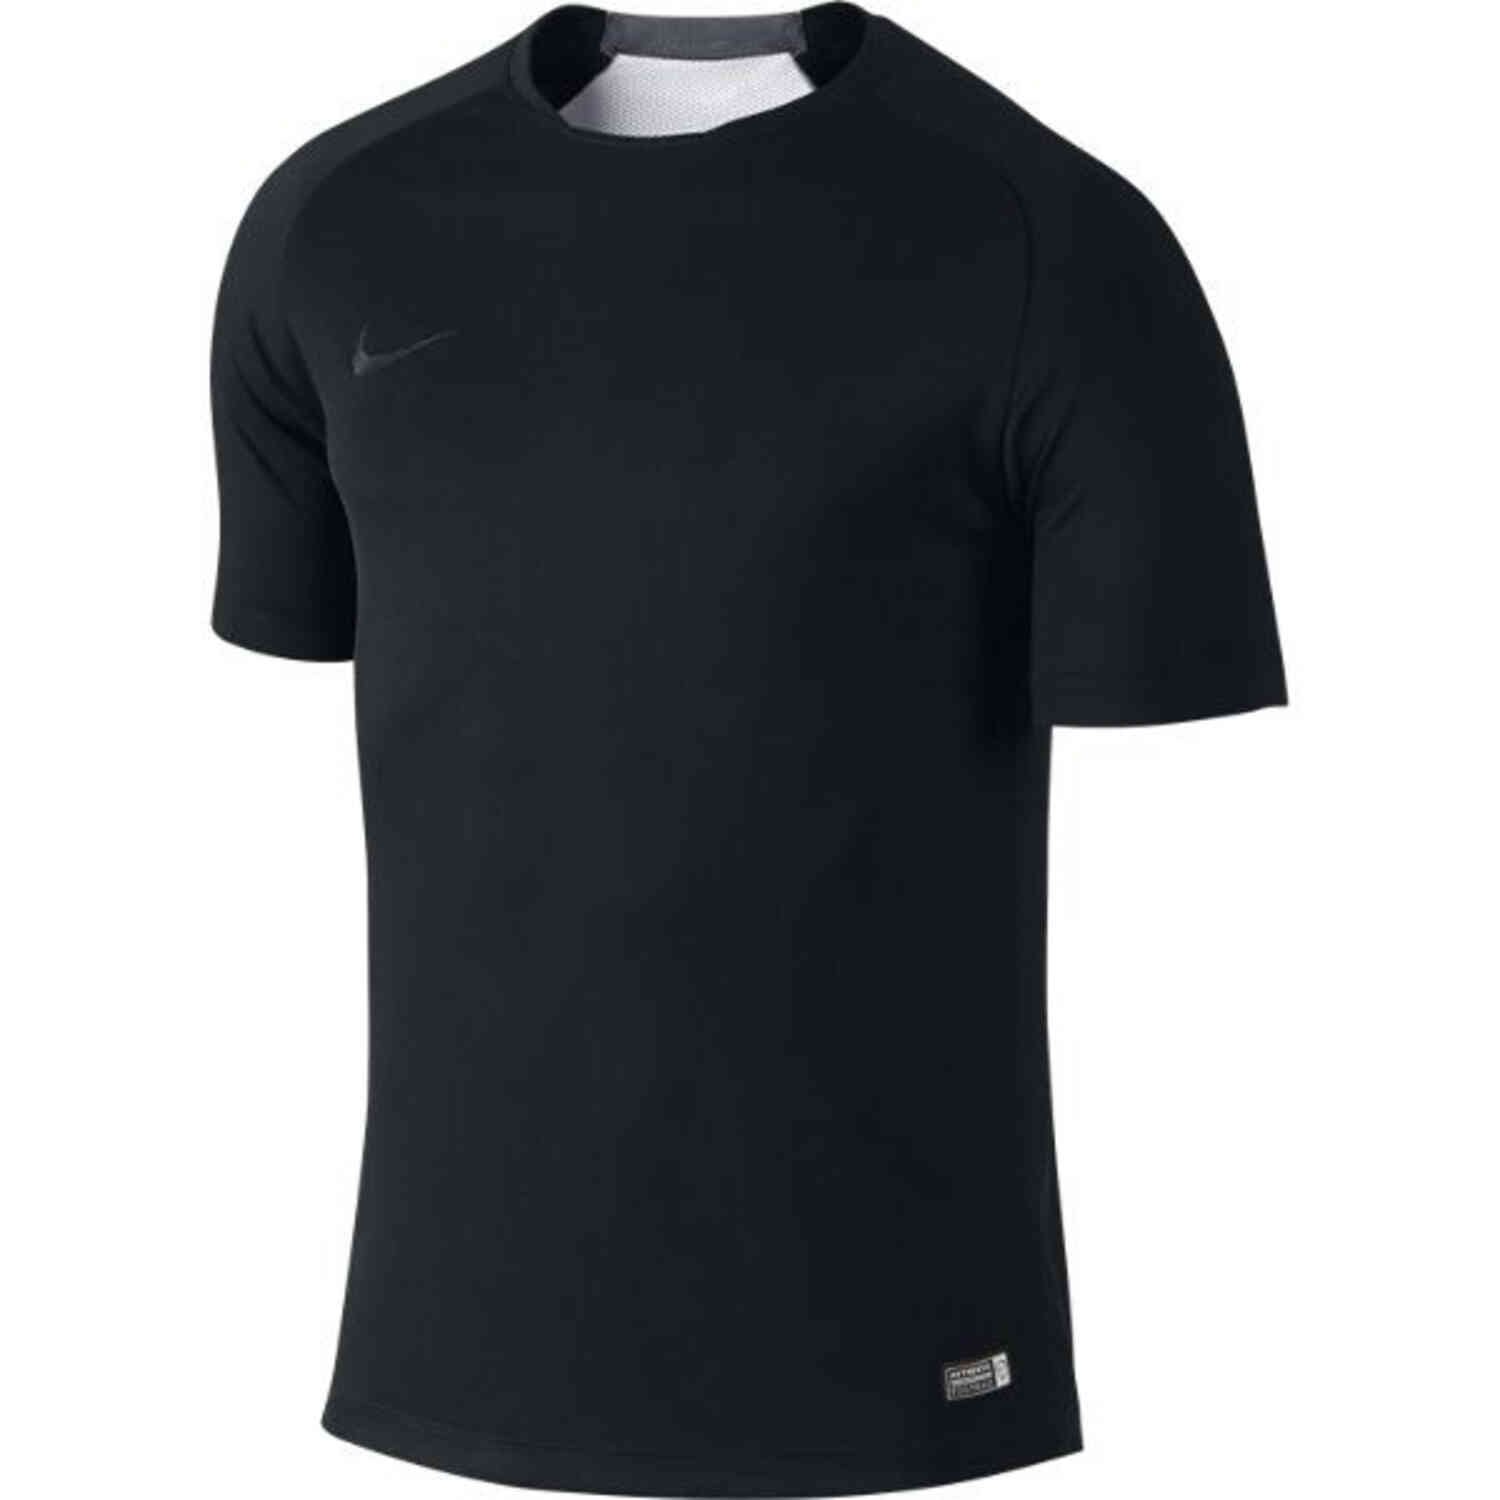 Nike GPX Training Top 2 - Nike Soccer Training Jerseys